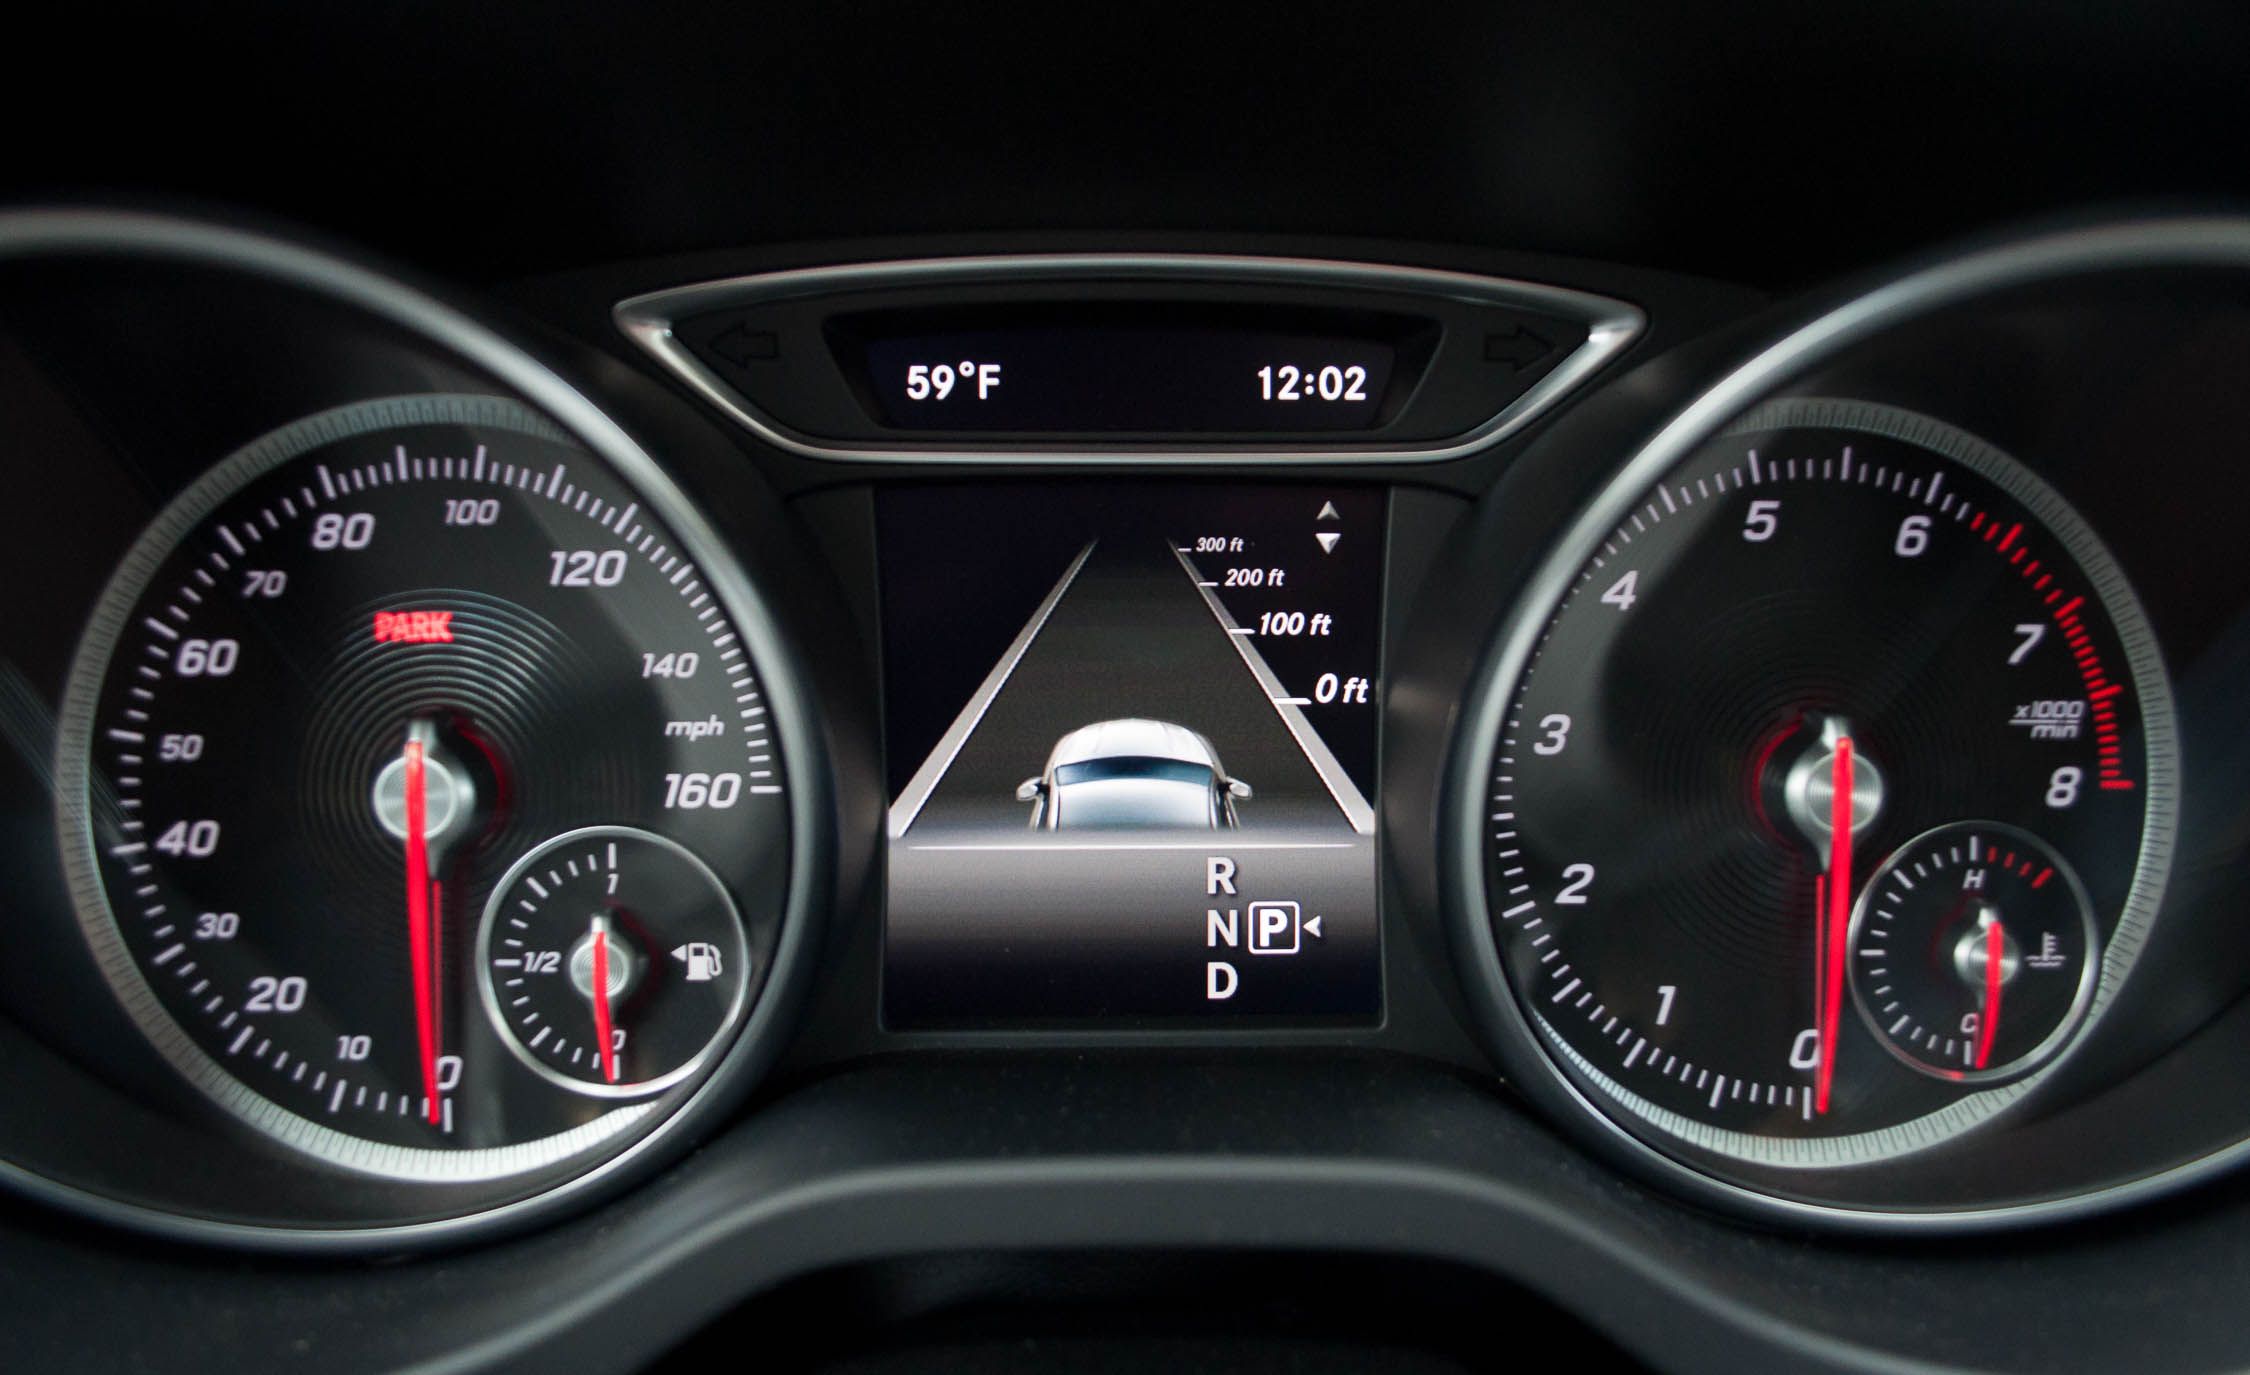 2017 Mercedes Benz Cla250 4matic Interior View Speedometer Instrument Cluster (View 20 of 21)